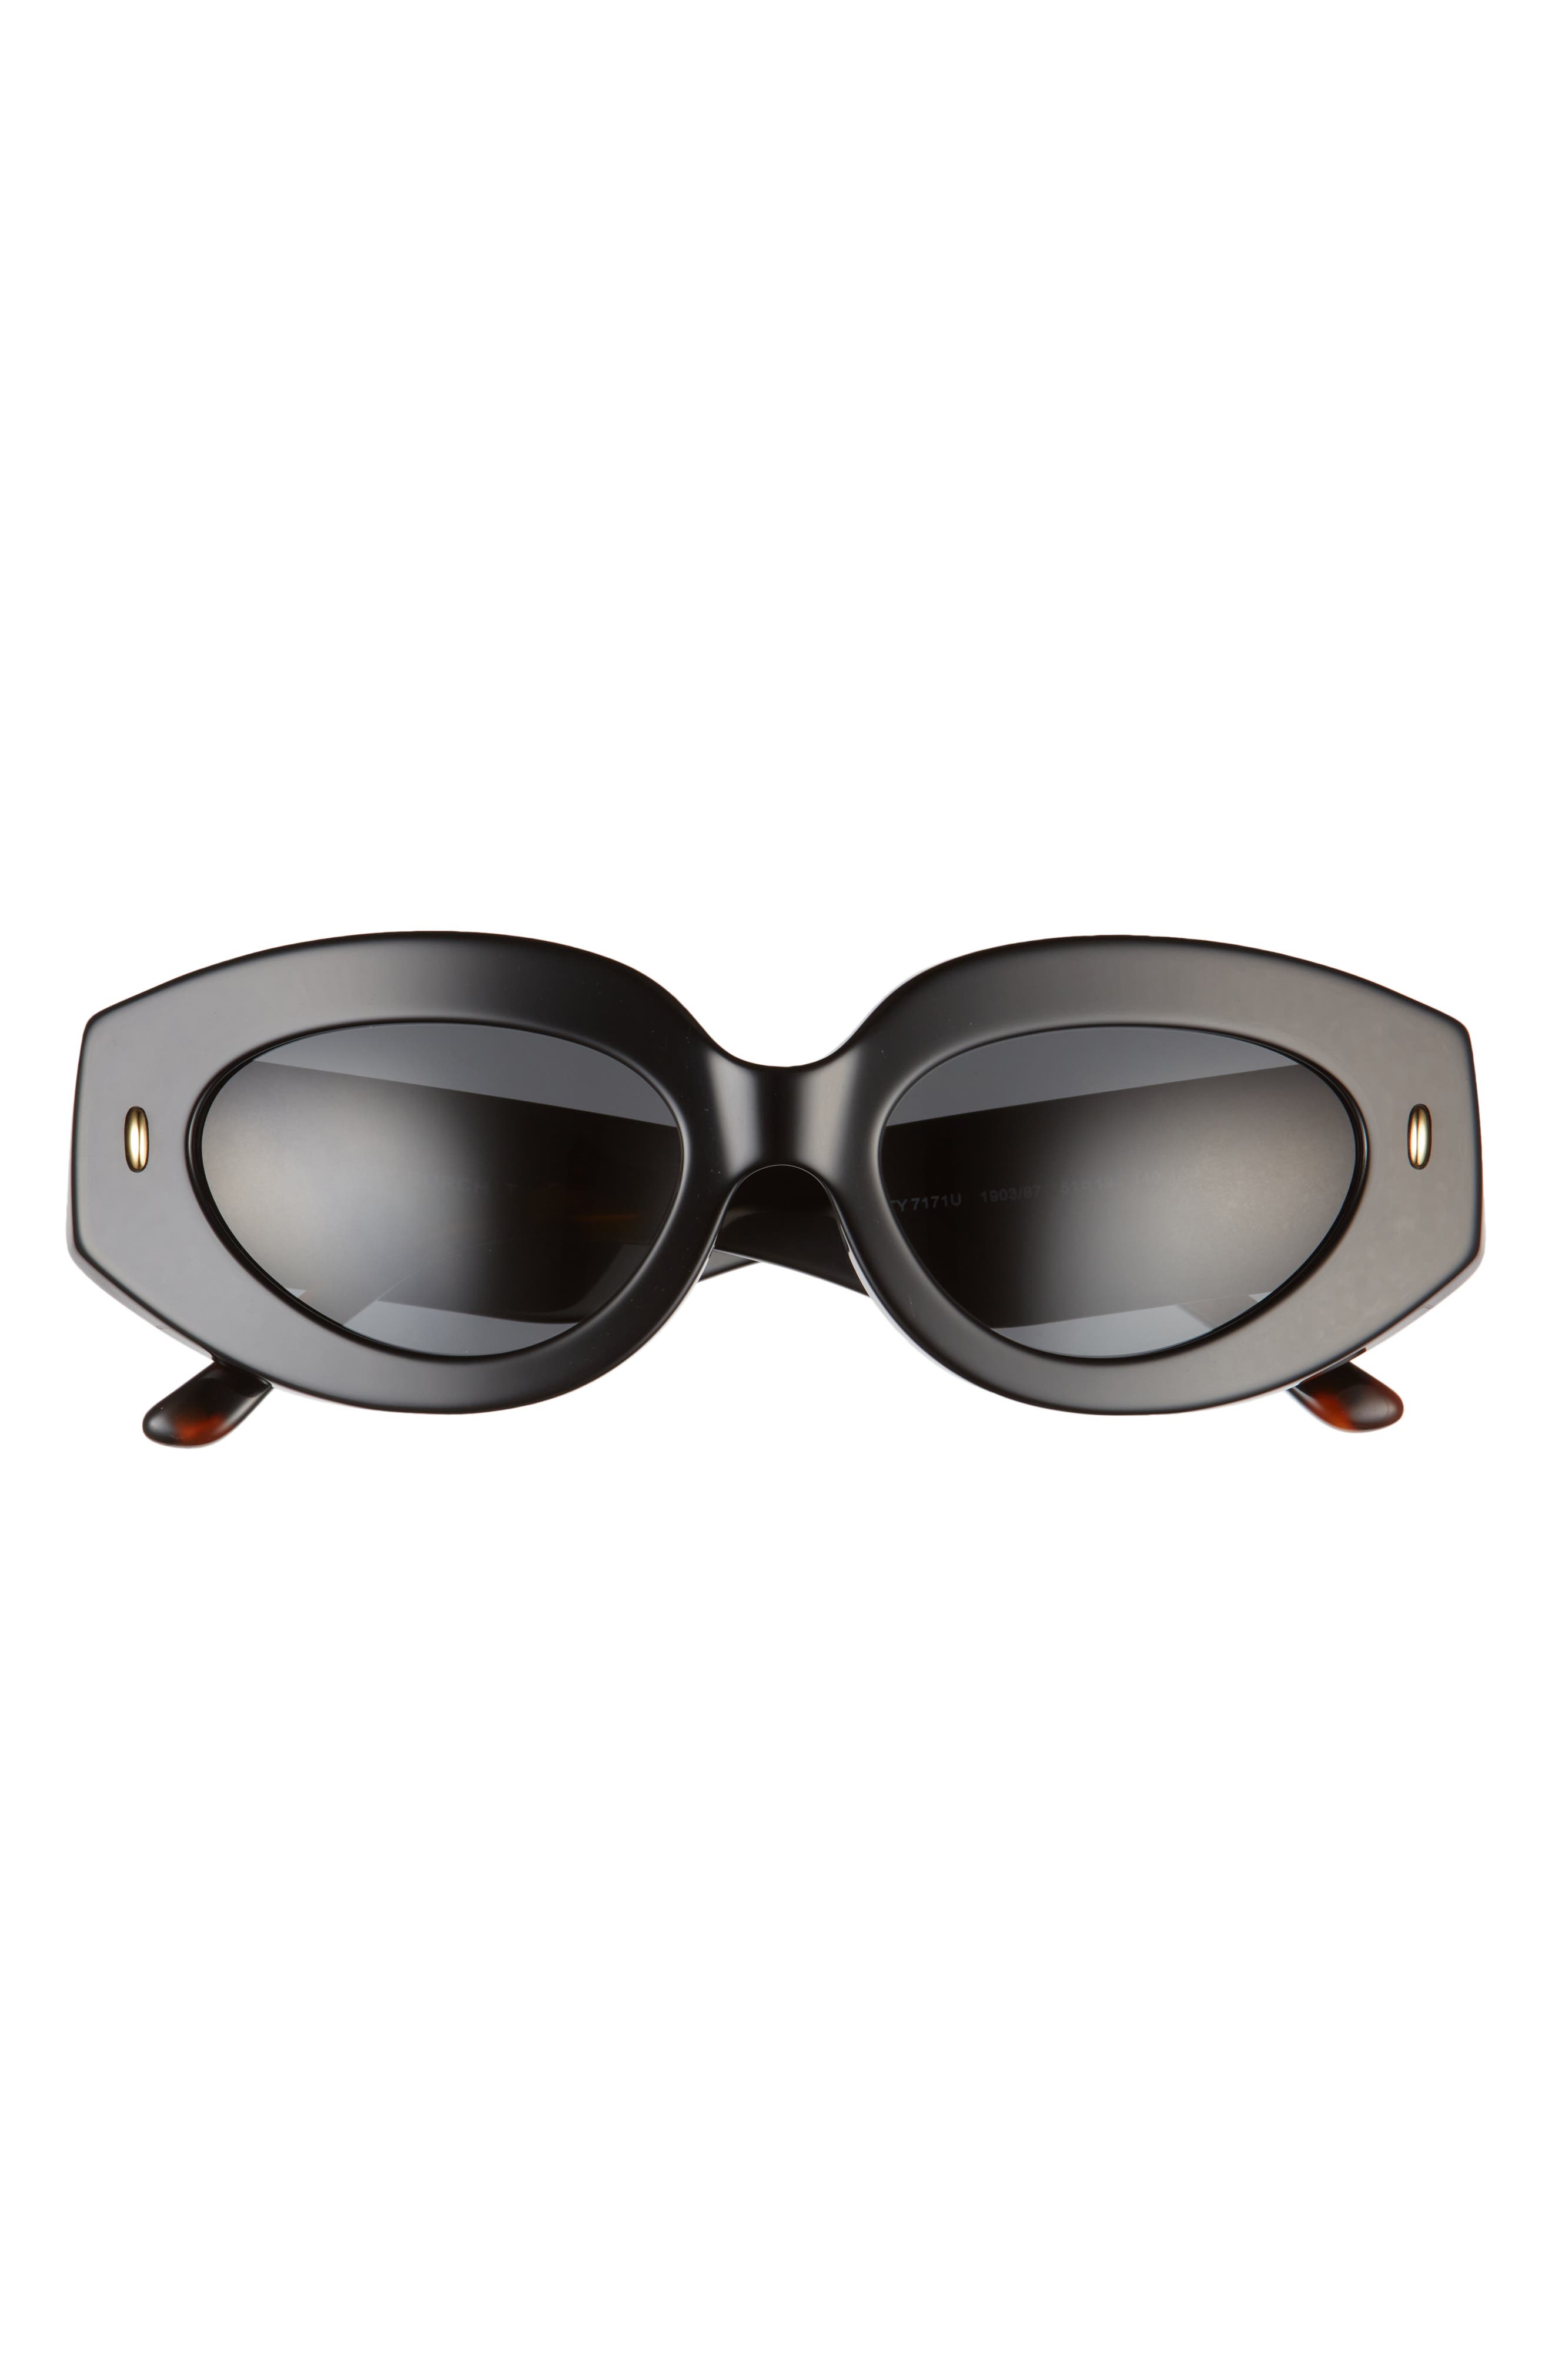 Tory Burch 51mm Oval Sunglasses in Black